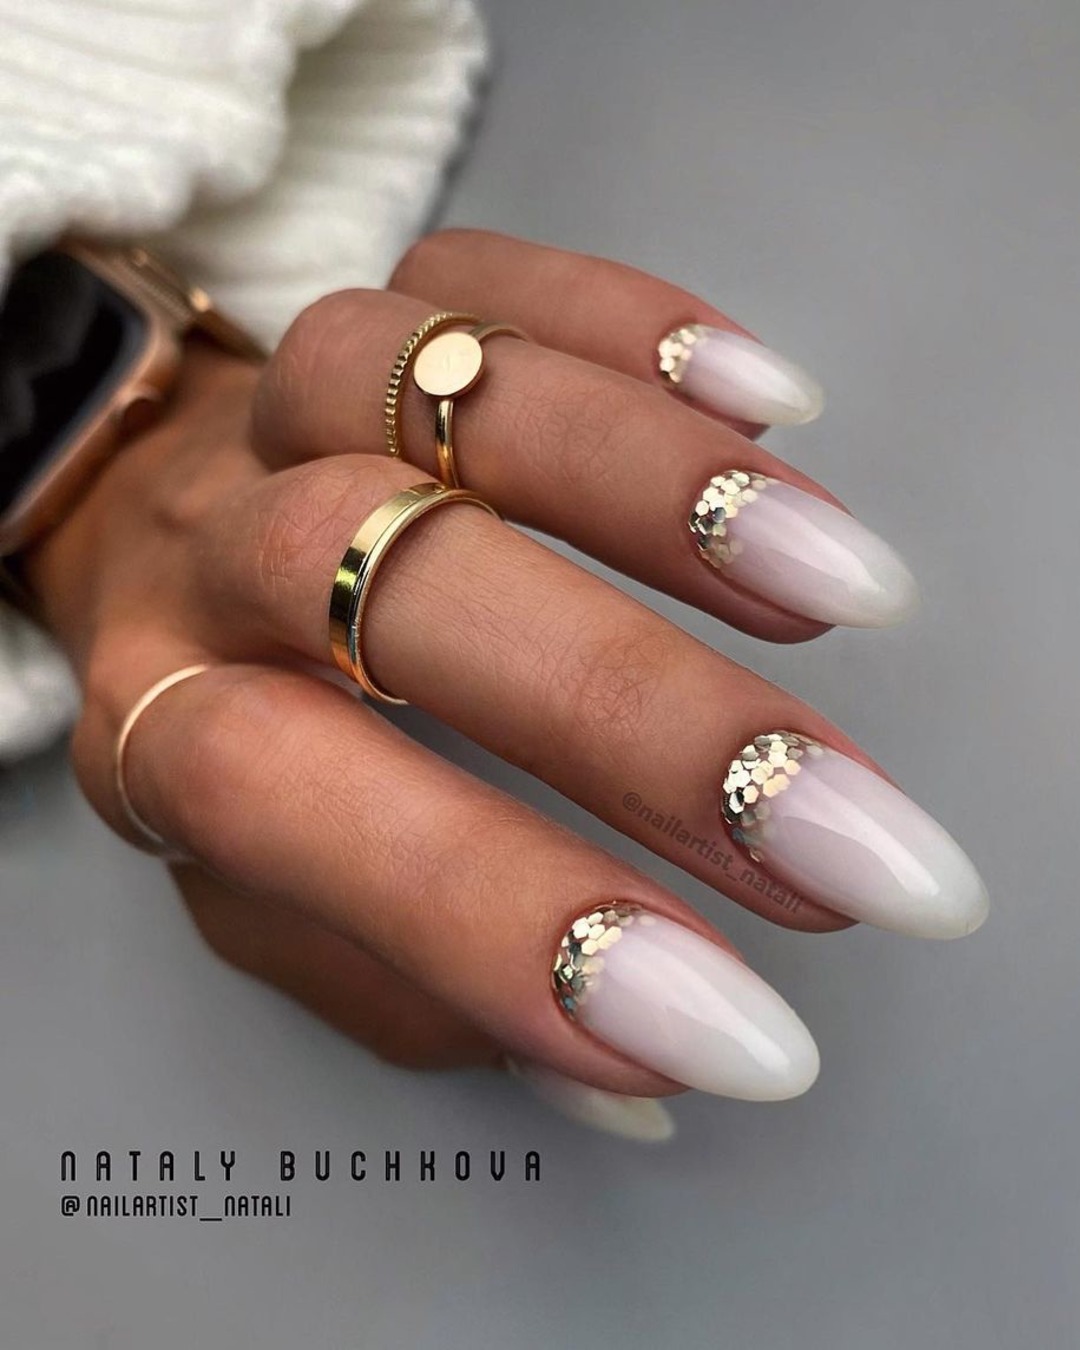 almond wedding nails designs